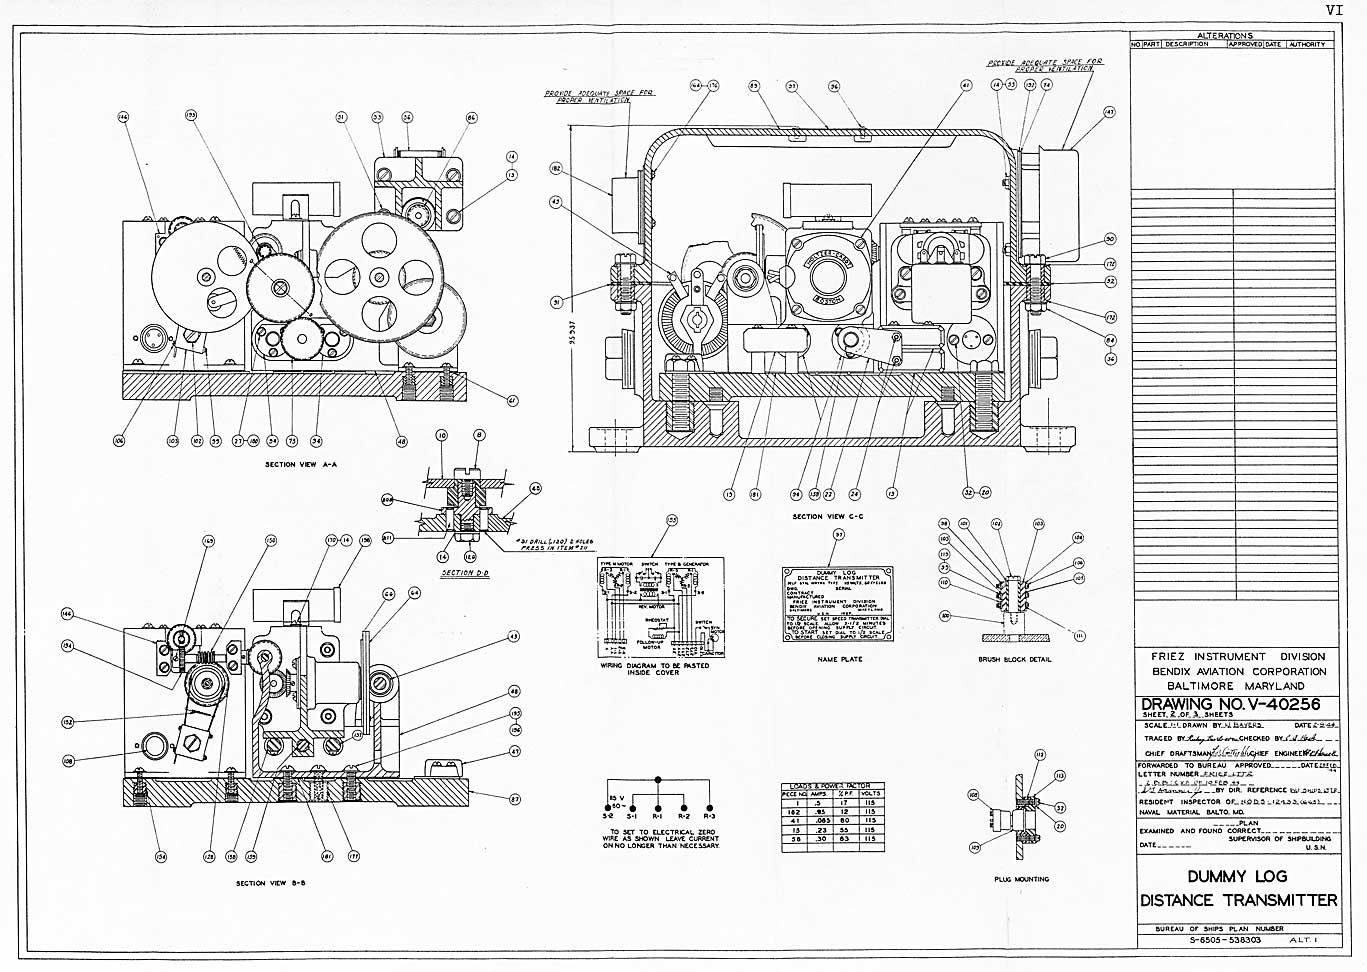 V-40256-Dummy Log Distance Transmitter-Sheet 2 - Assembly-Section Views